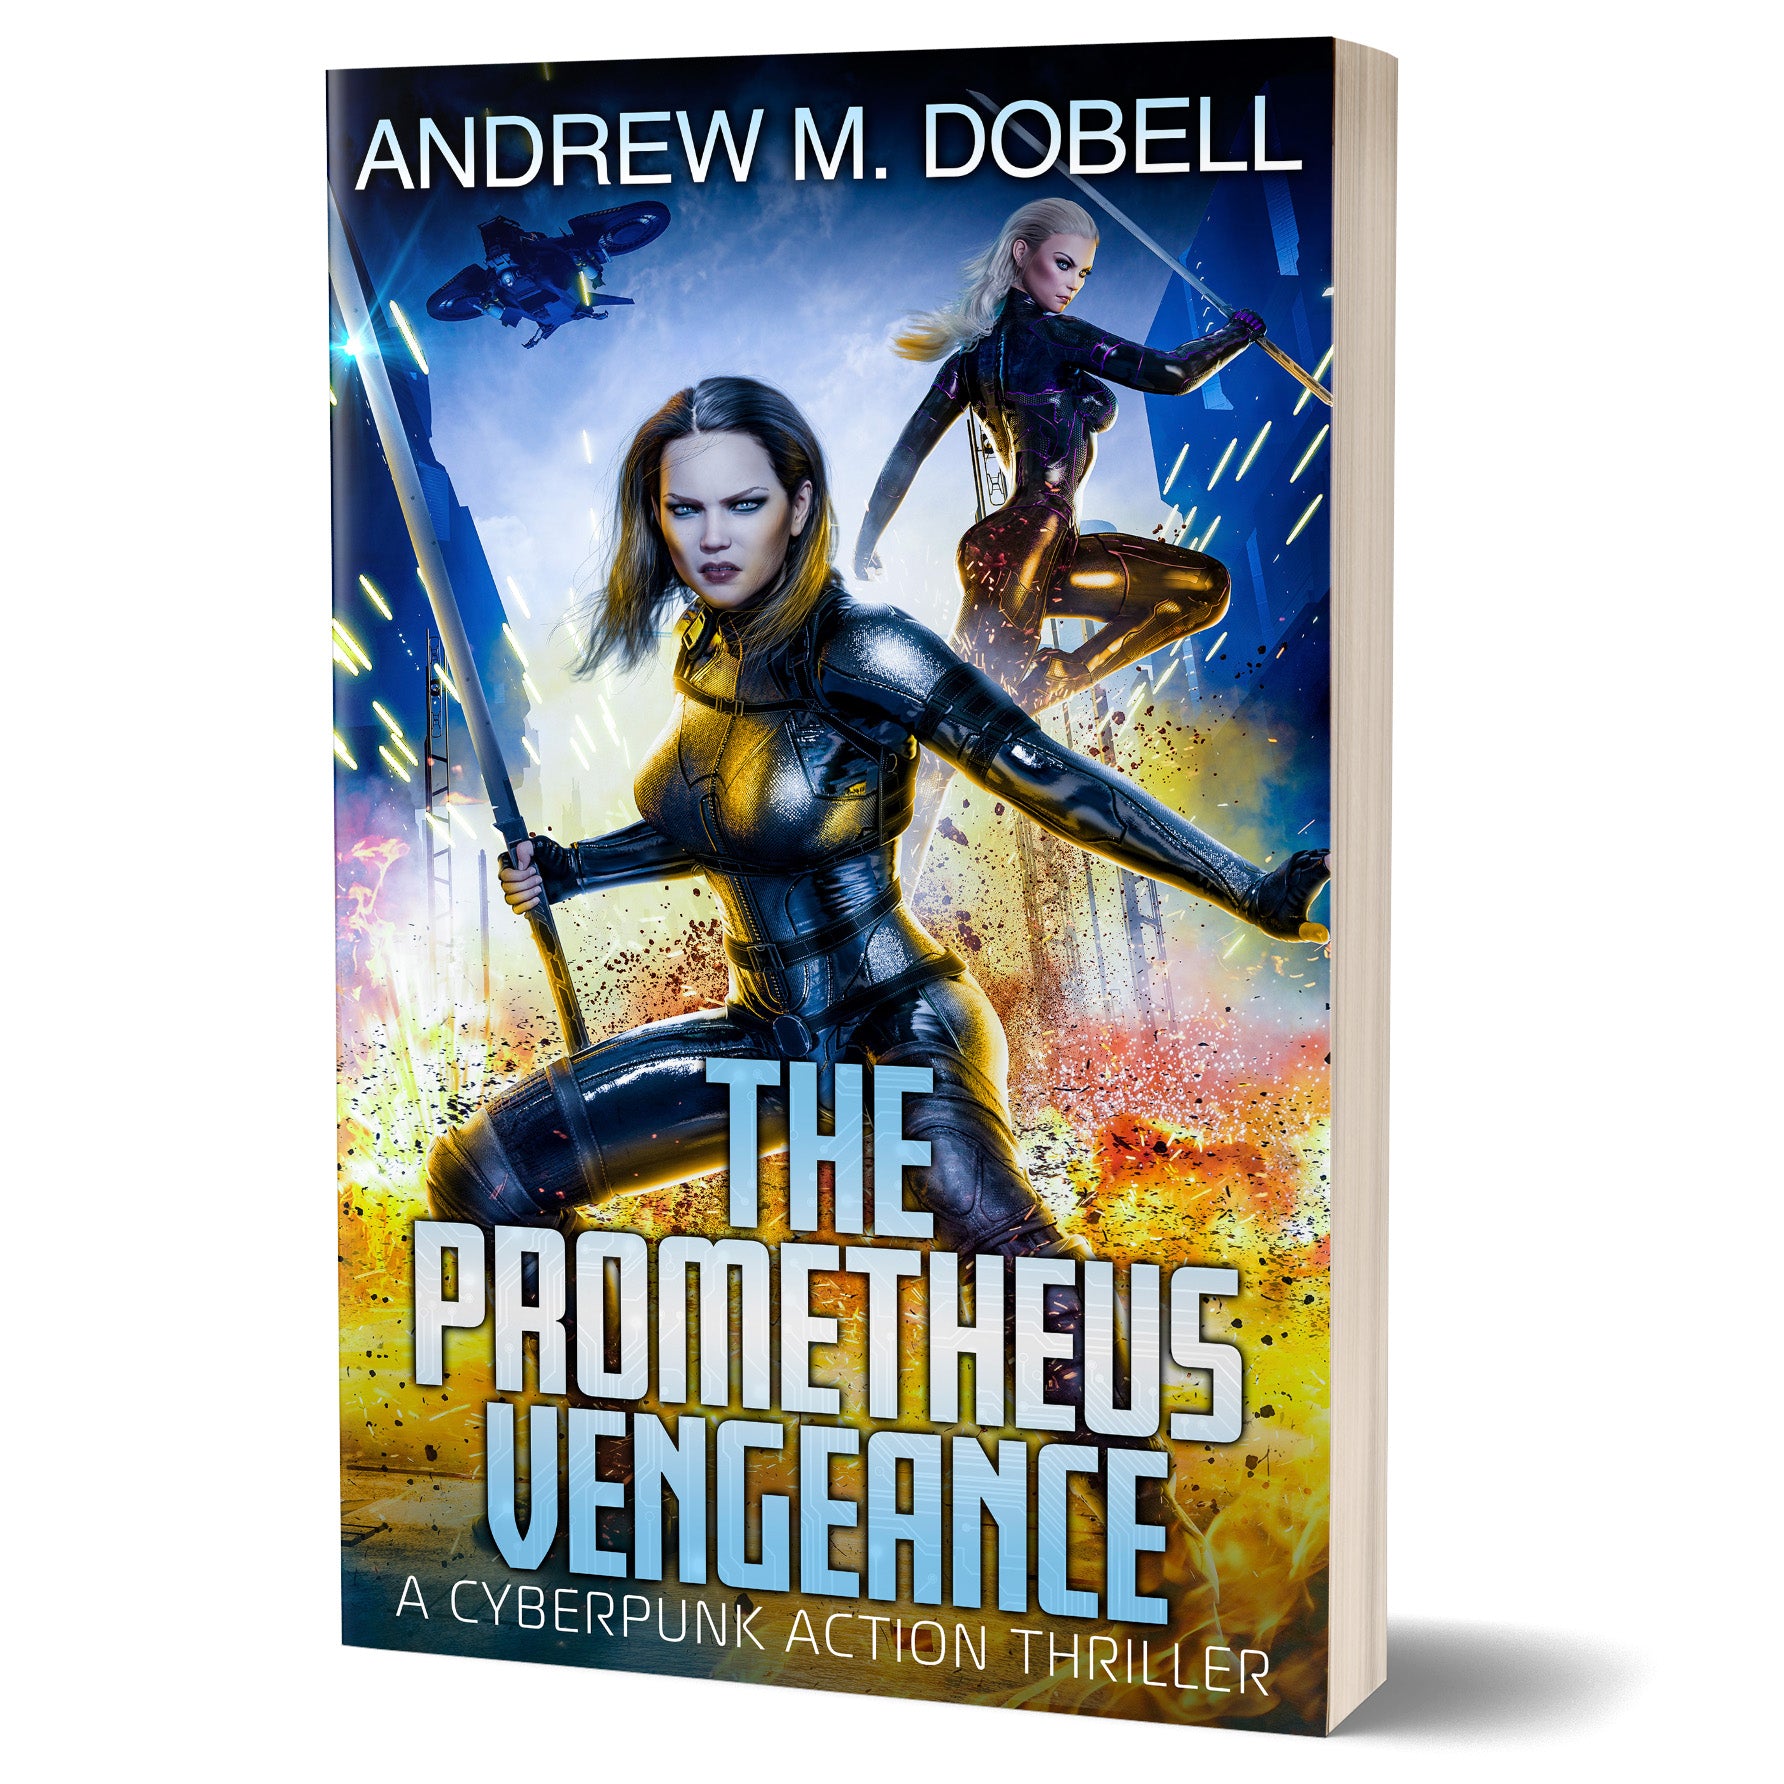 The Prometheus Vengeance, a cyberpunk action thriller series.